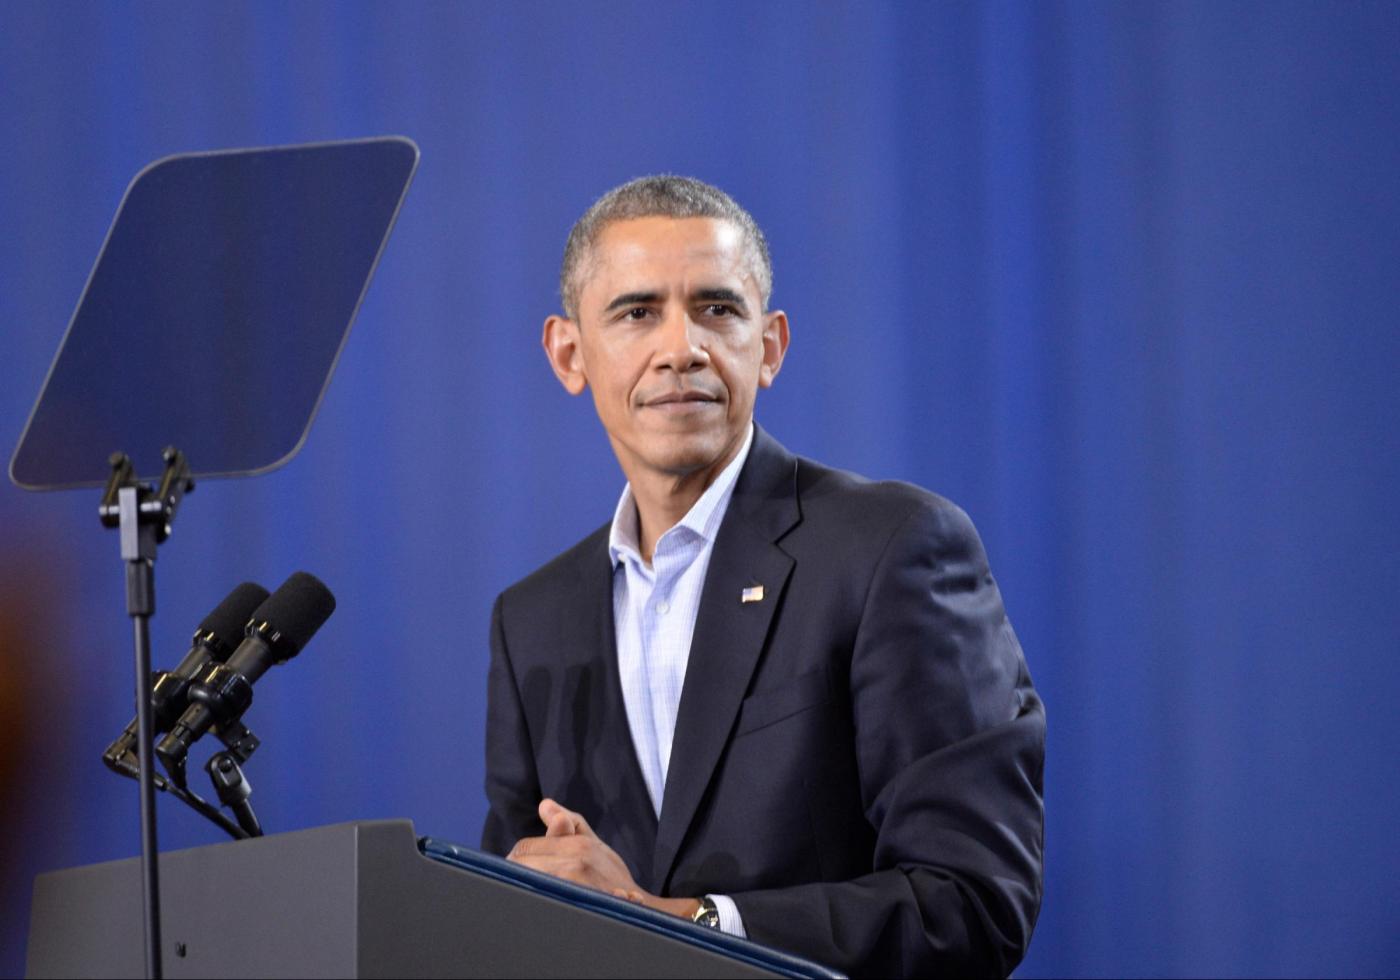 Usa, svolta "rosa" per Barack Obama: "Mai piu' donne sottopagate"